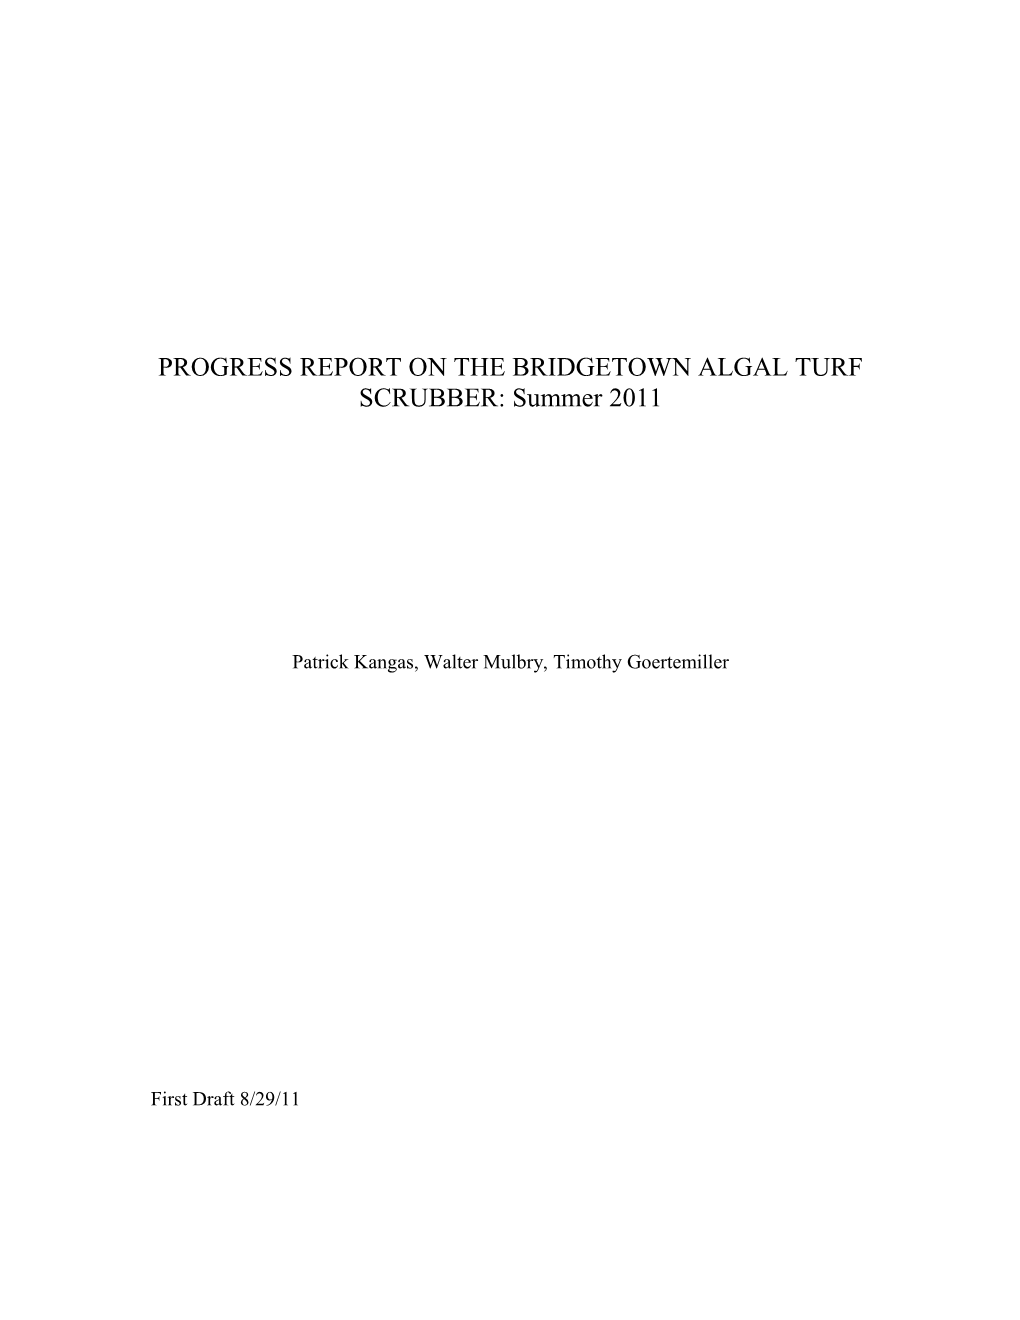 PROGRESS REPORT on the BRIDGETOWN ALGAL TURF SCRUBBER: Summer 2011